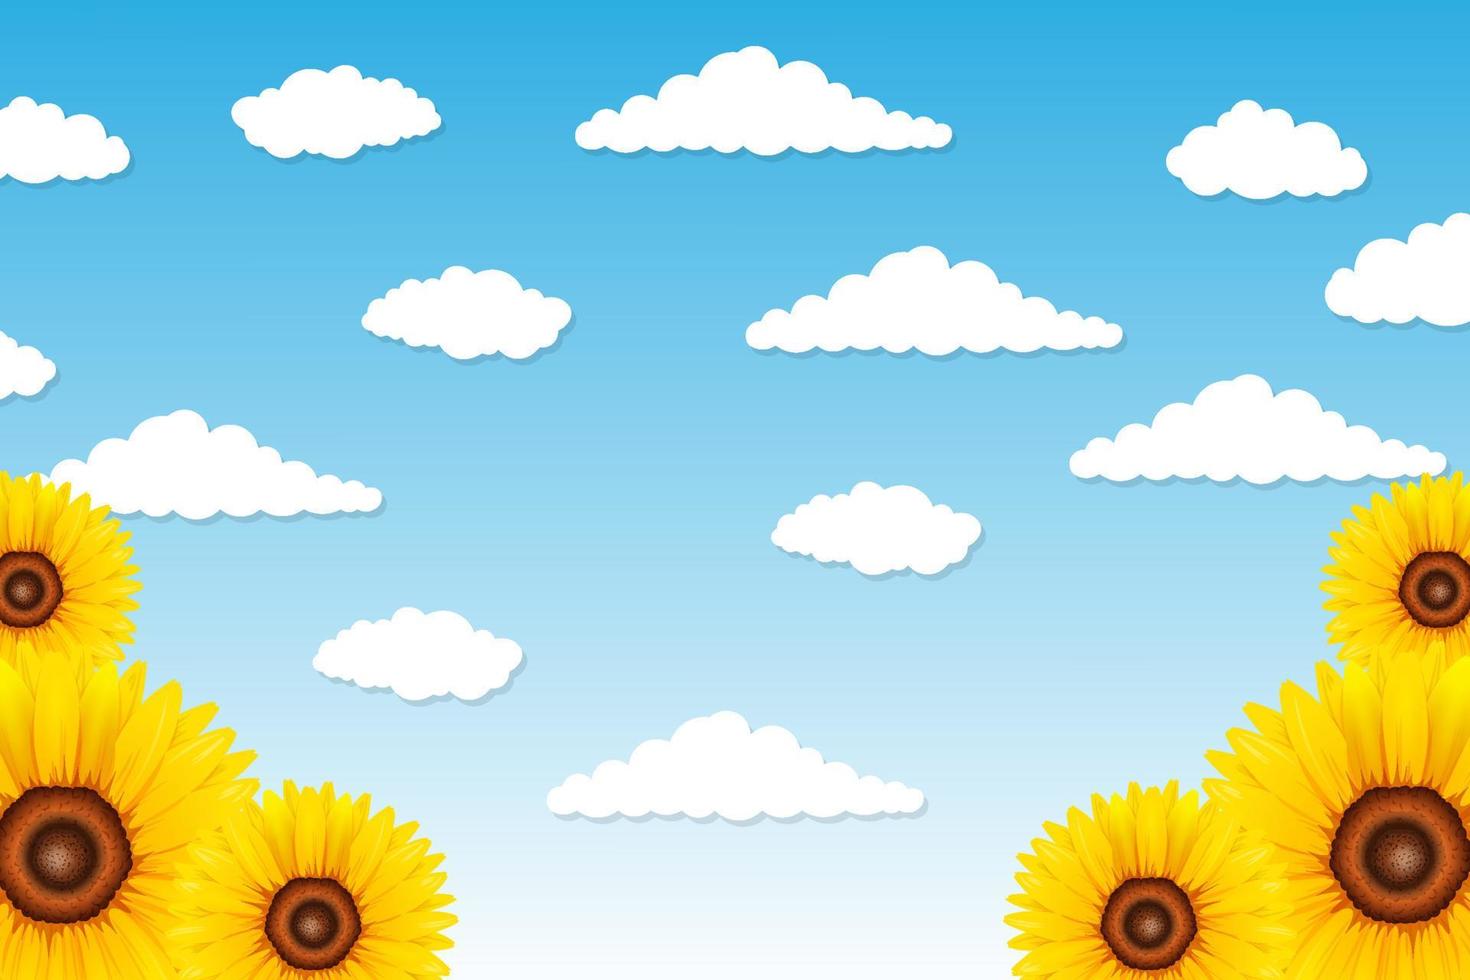 sunflower farm garden cloudy blue sky template cute background wallpaper design illustration vector